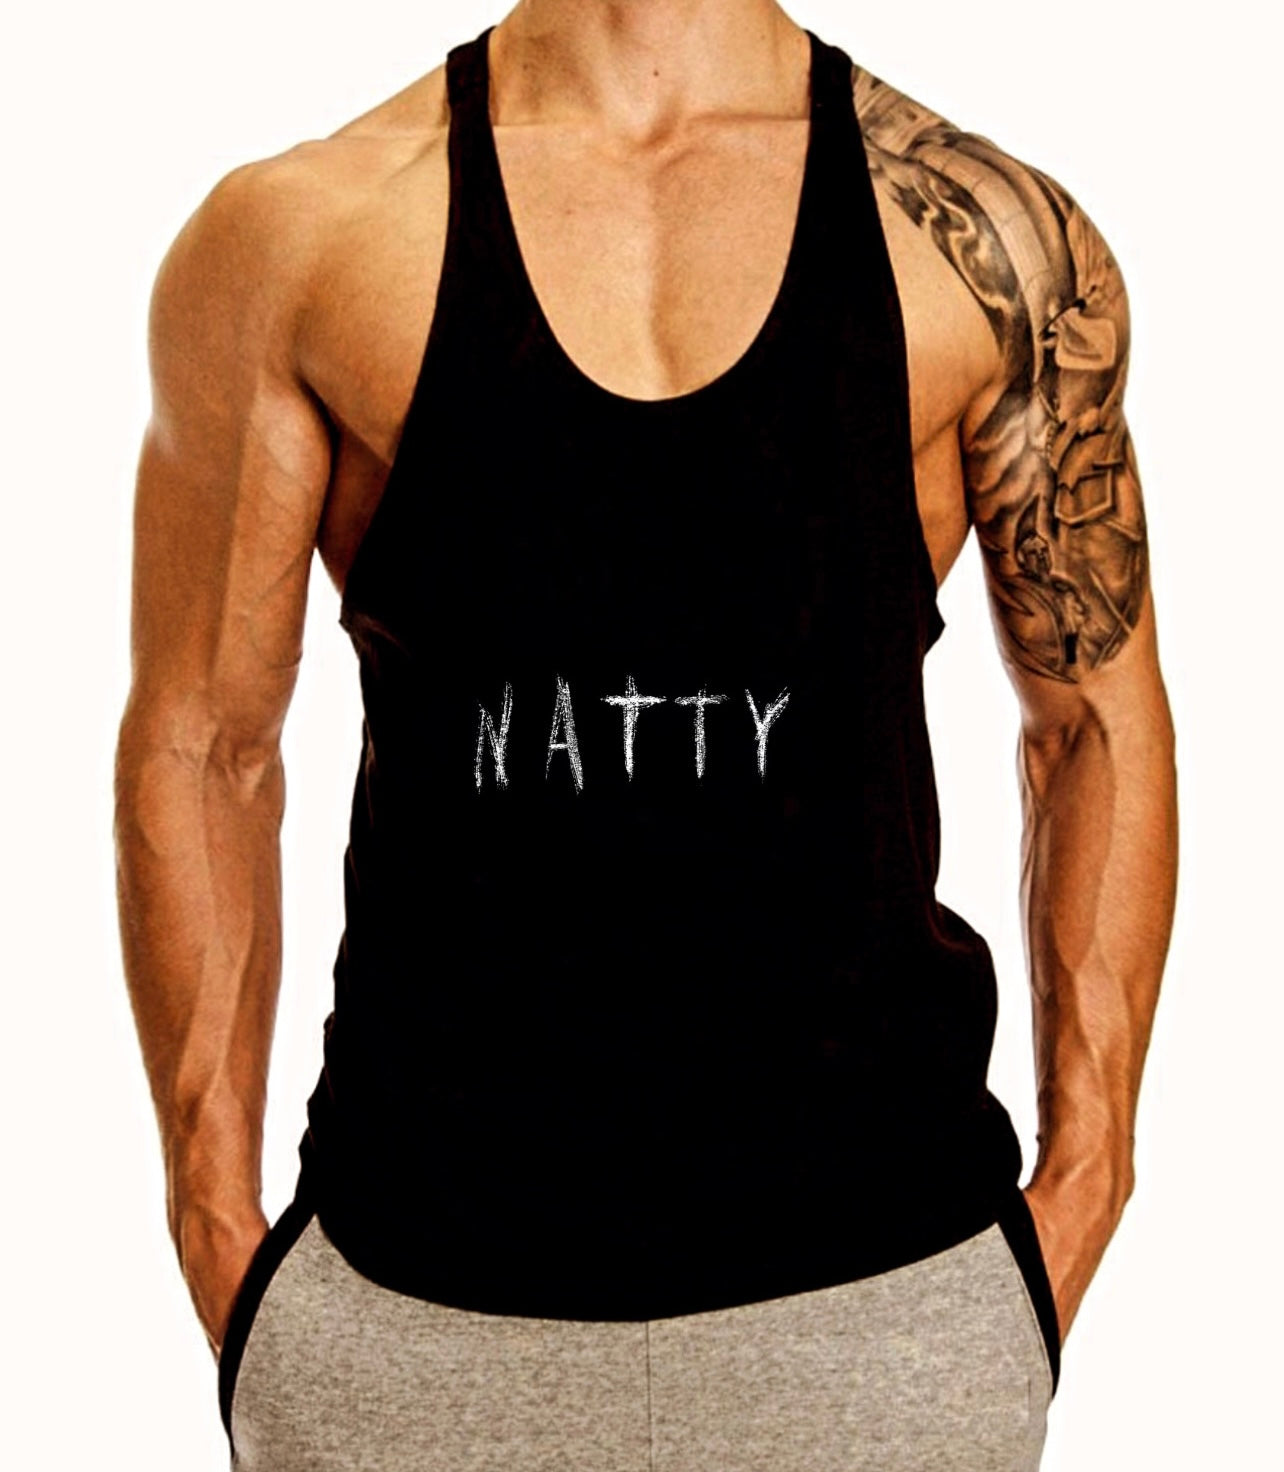 Natty (STRINGER)